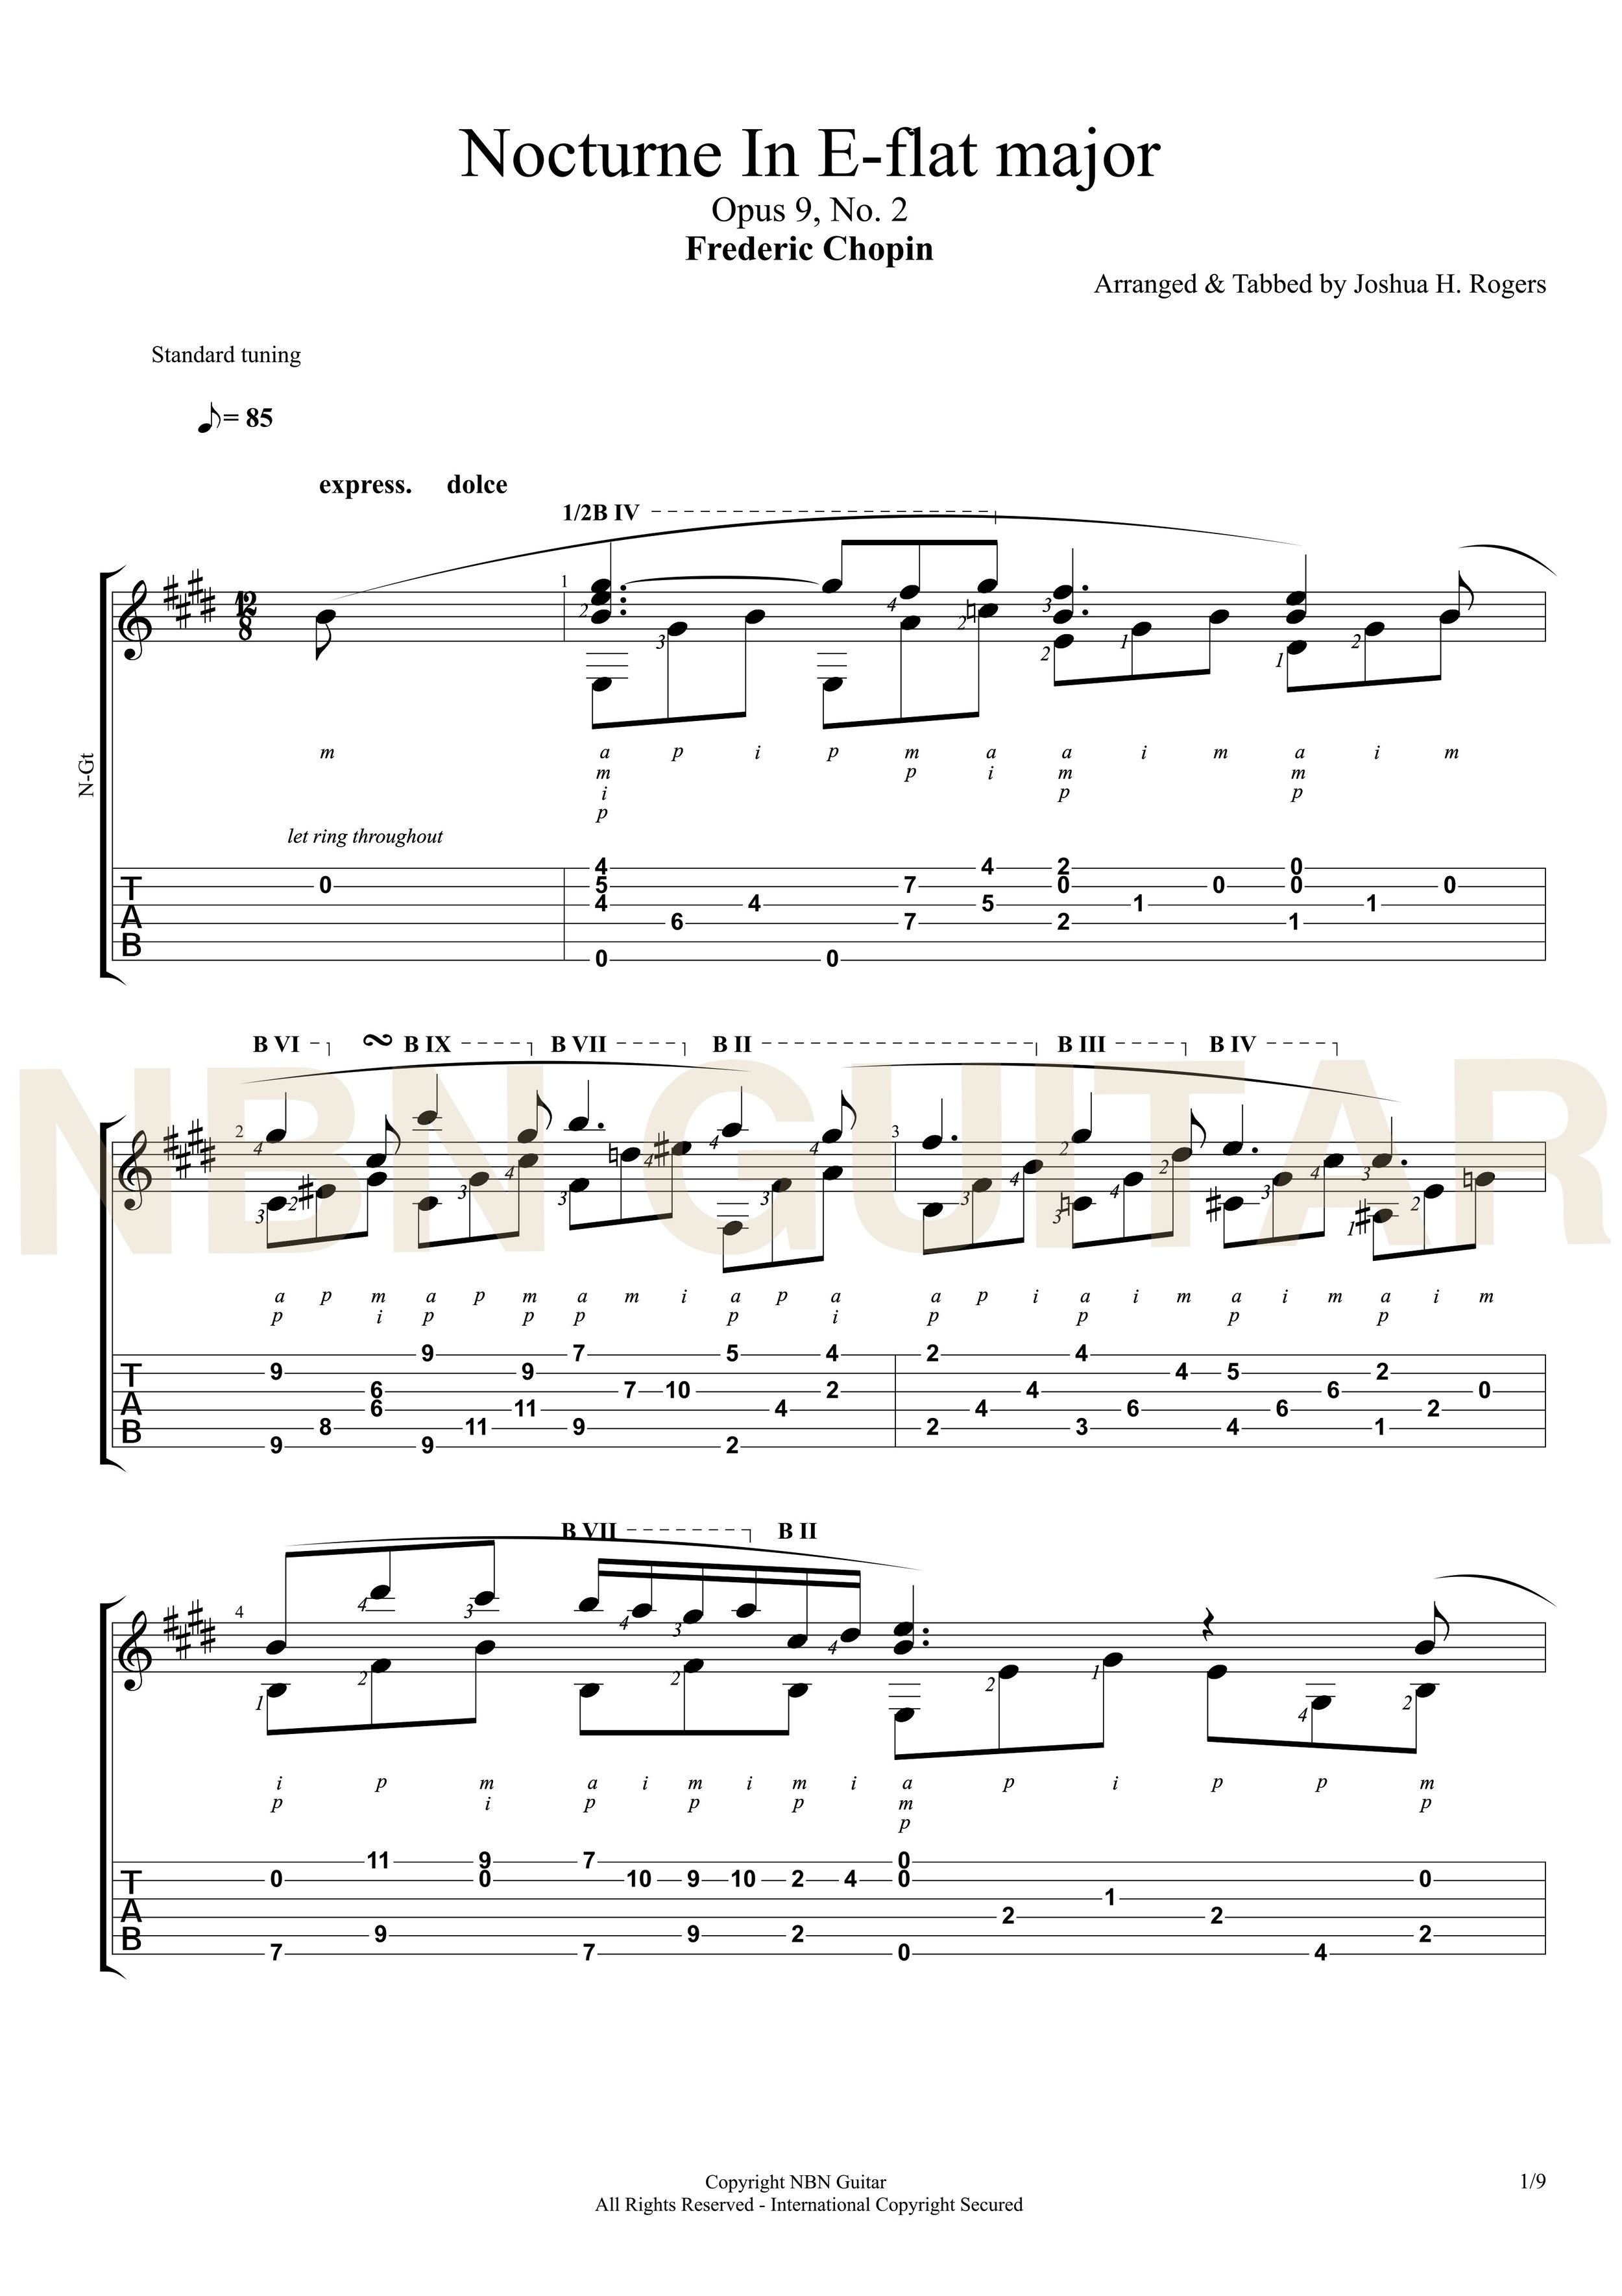 Nocturne in E-flat major (Sheet Music & Tabs)-p03.jpg